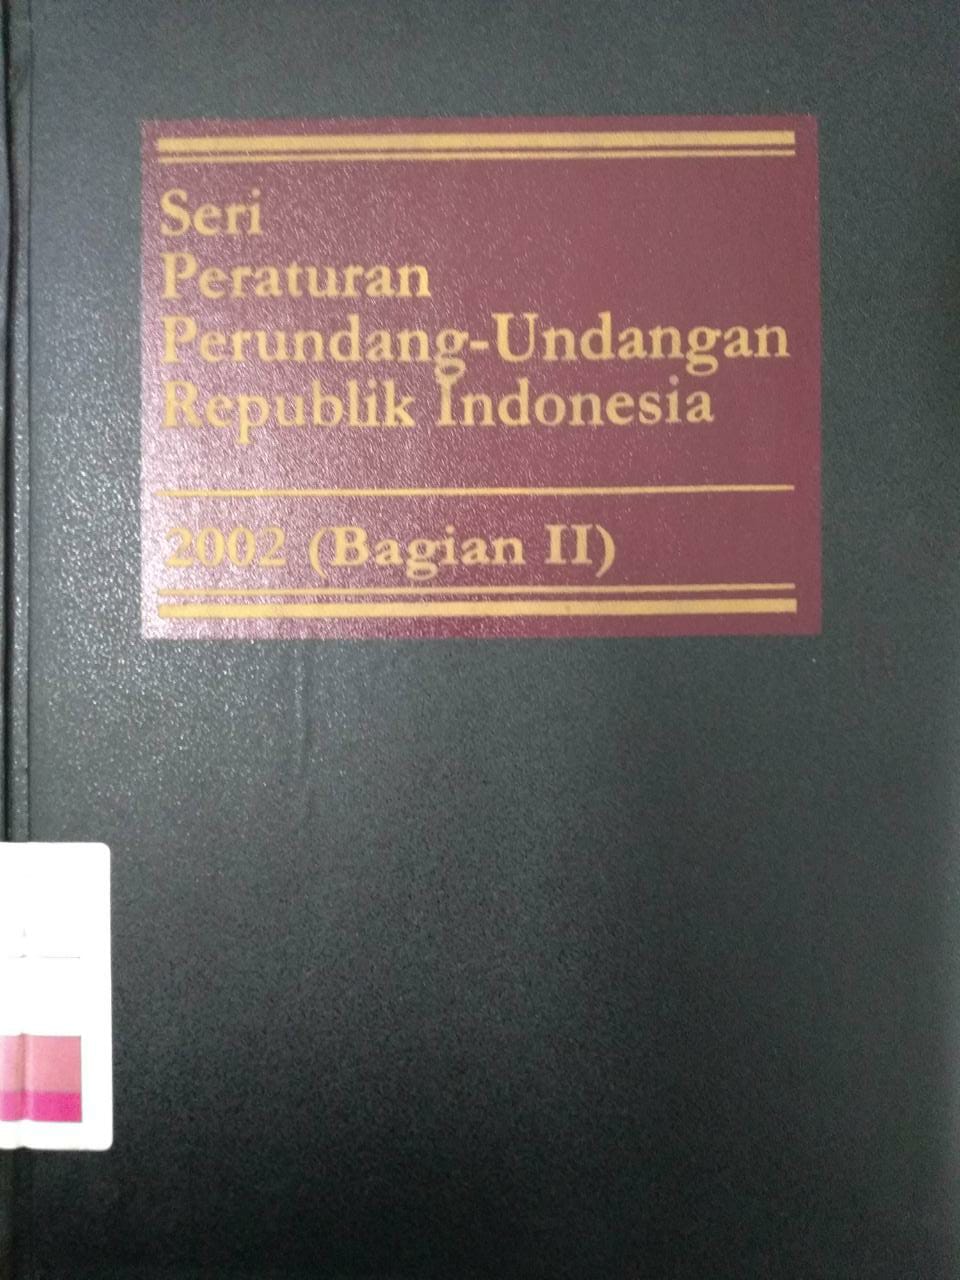 Seri Peraturan Perundang-undangan Republik Indonesia 2006 (Bagian I)